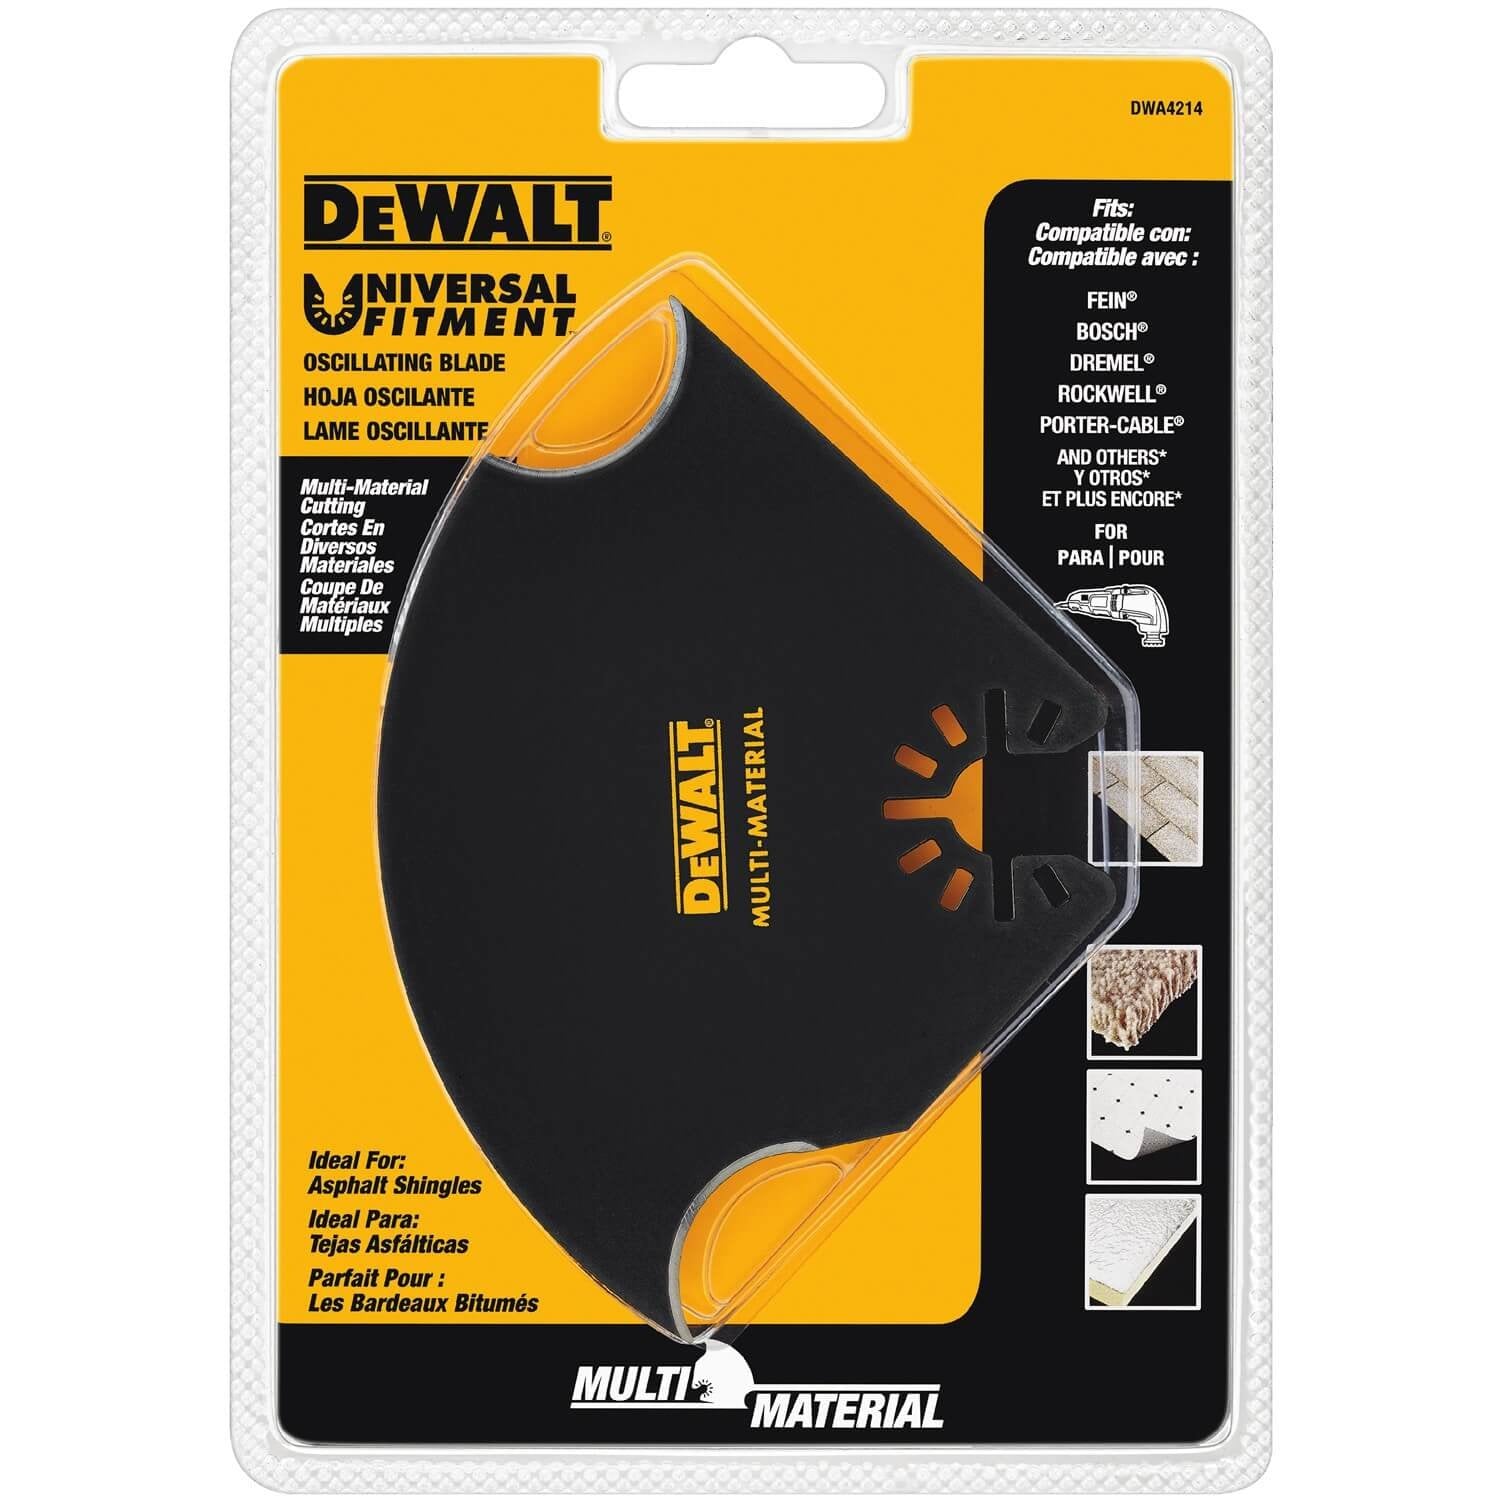 DEWALT DWA4214 - Oscillating Multi-Material Blade